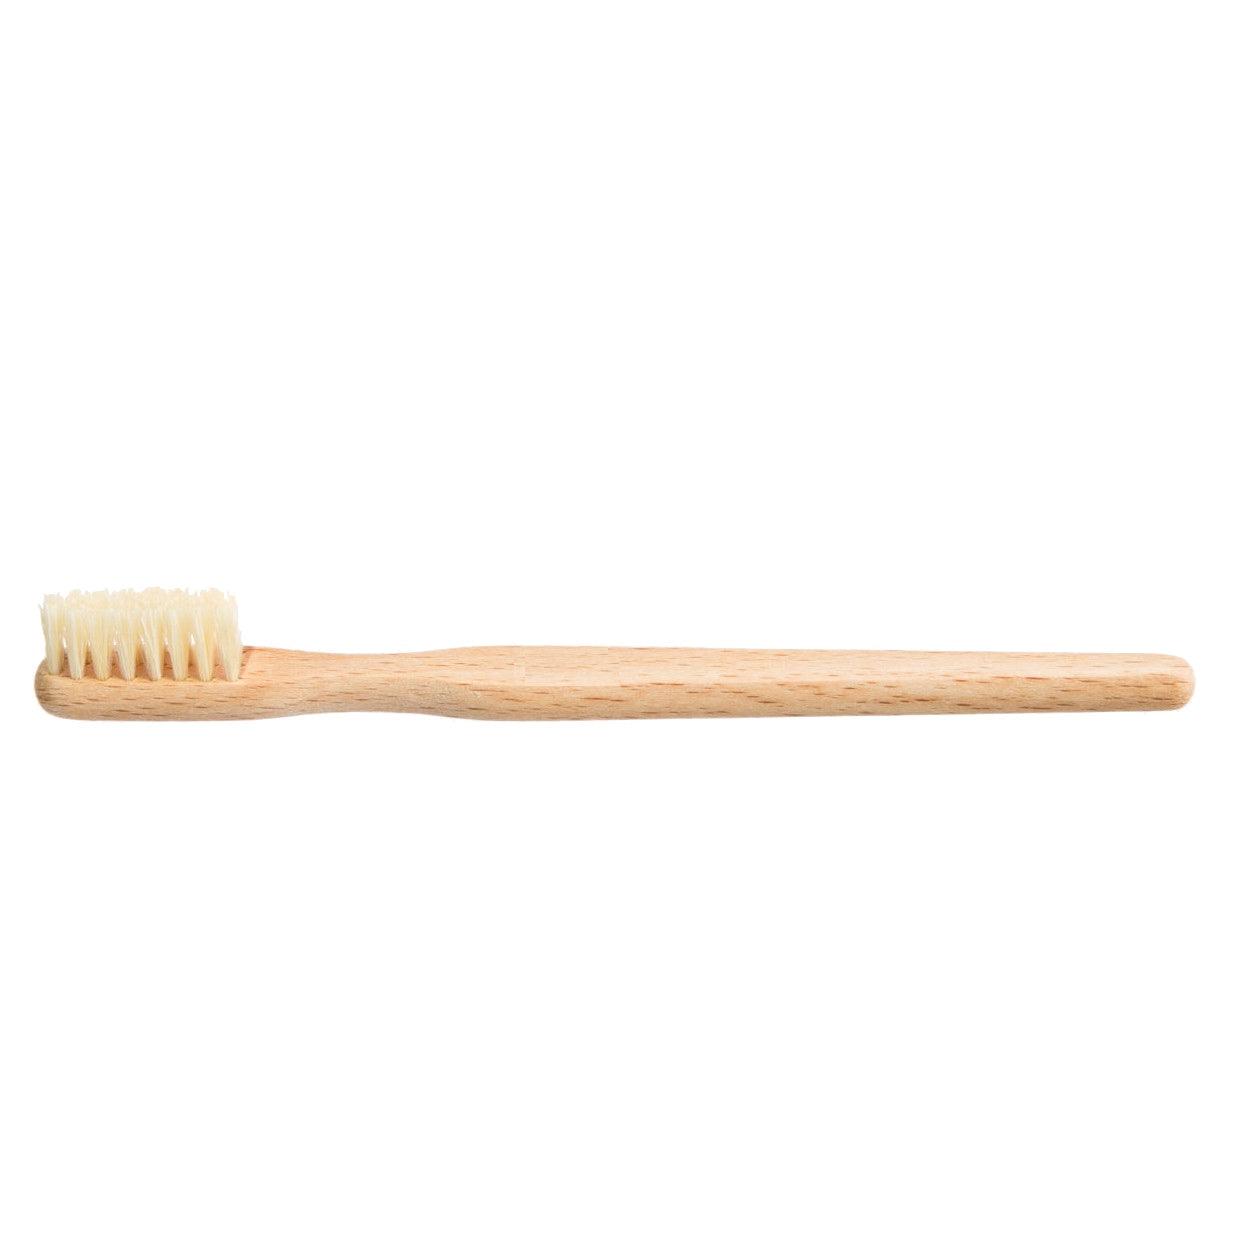 Toothbrush 100% natural bristles and beech wood handle